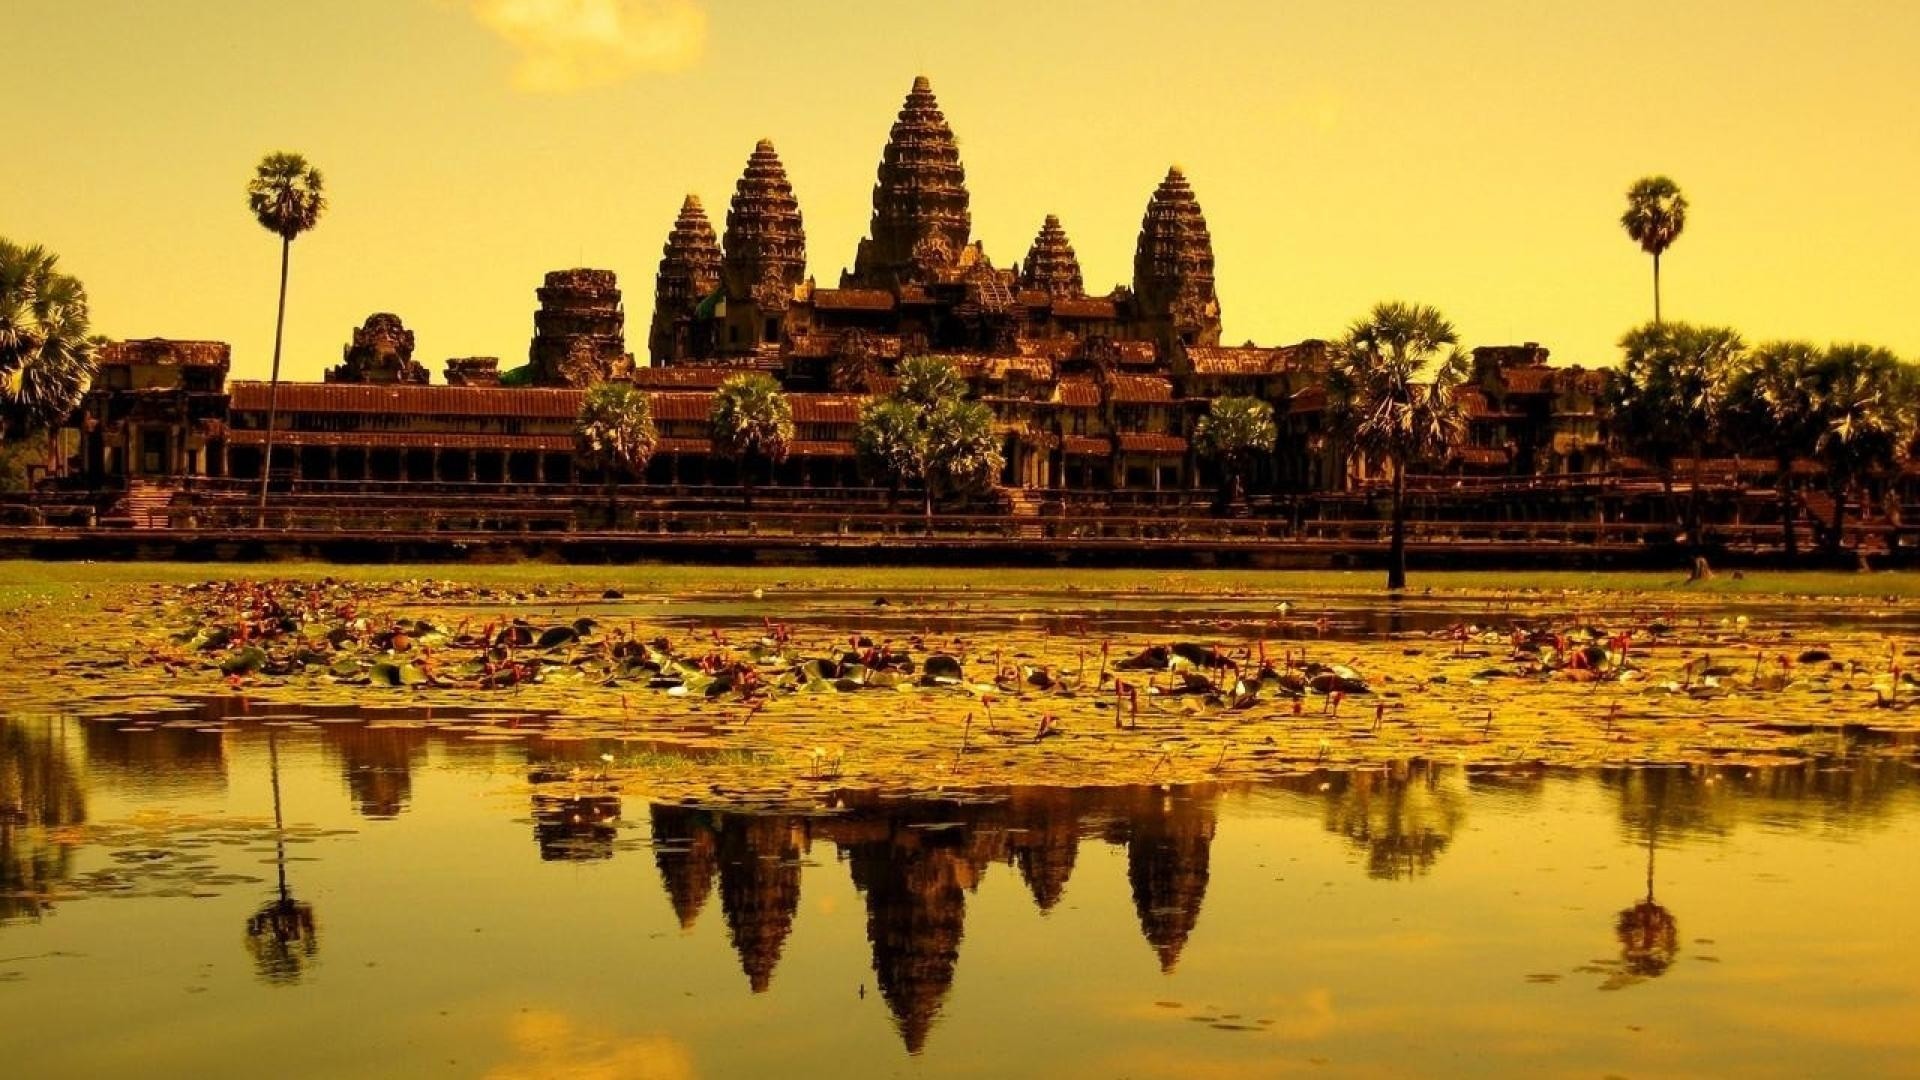 Title - Angkor Wat , HD Wallpaper & Backgrounds